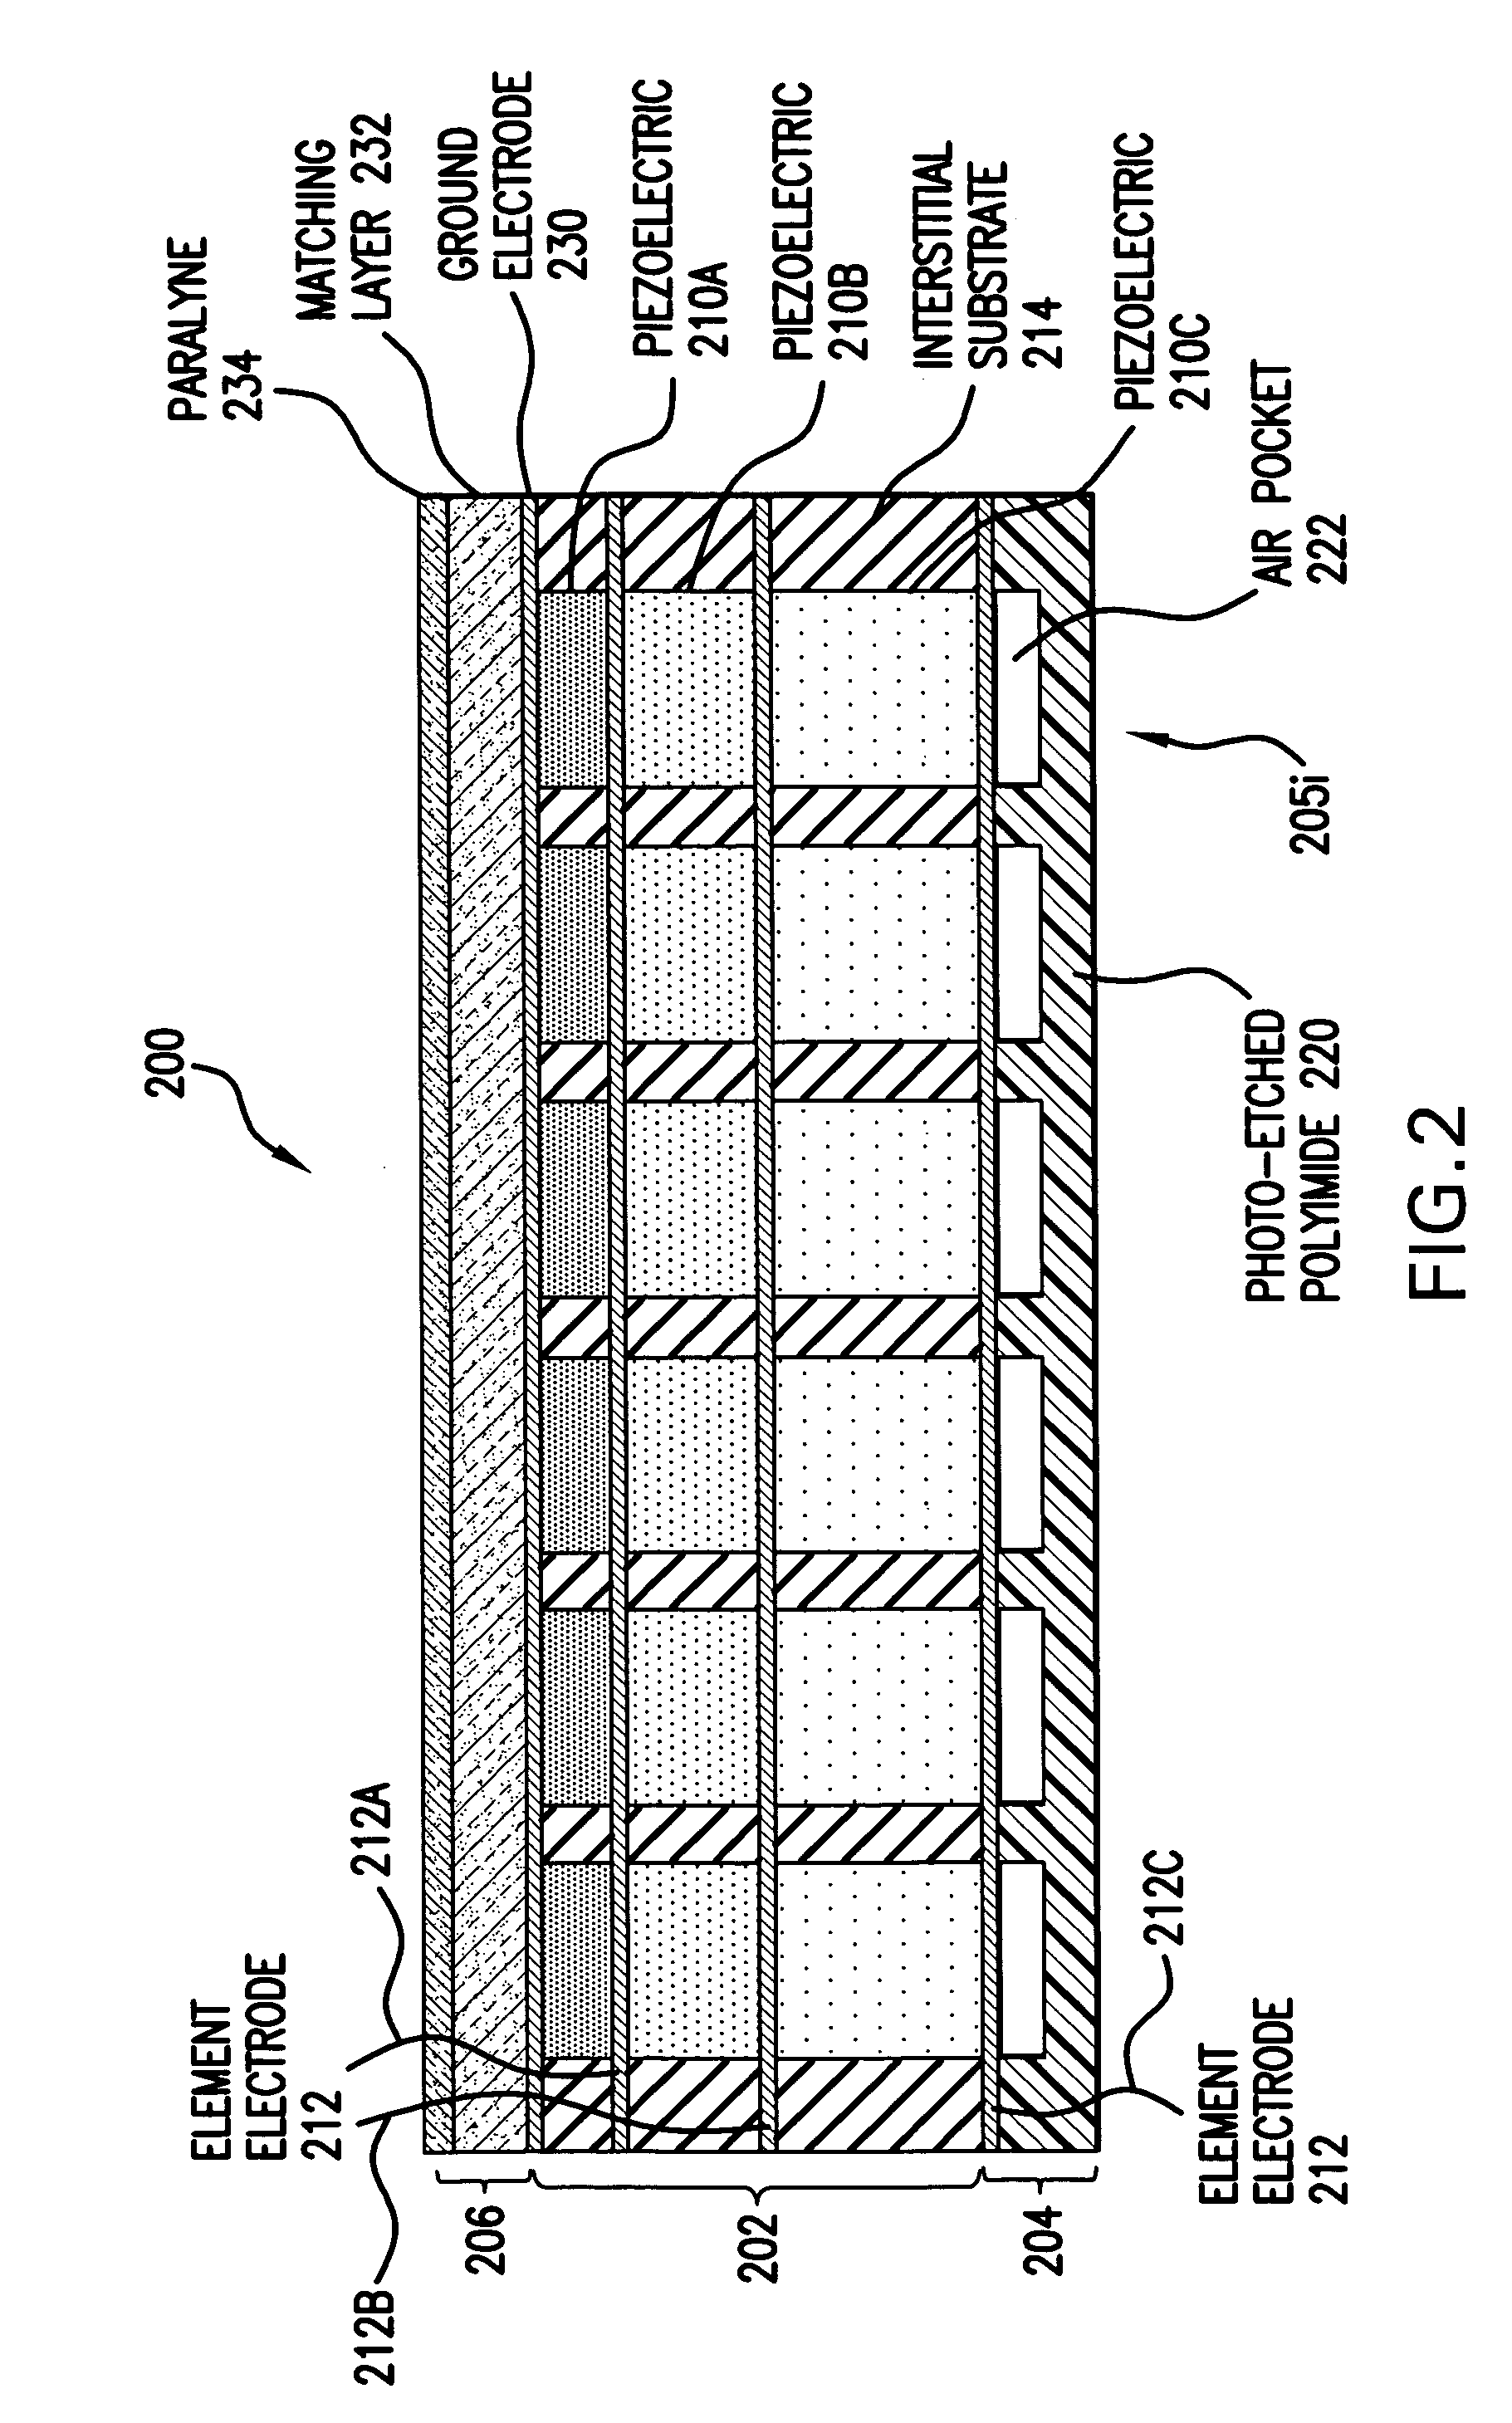 Composite piezoelectric apparatus and method